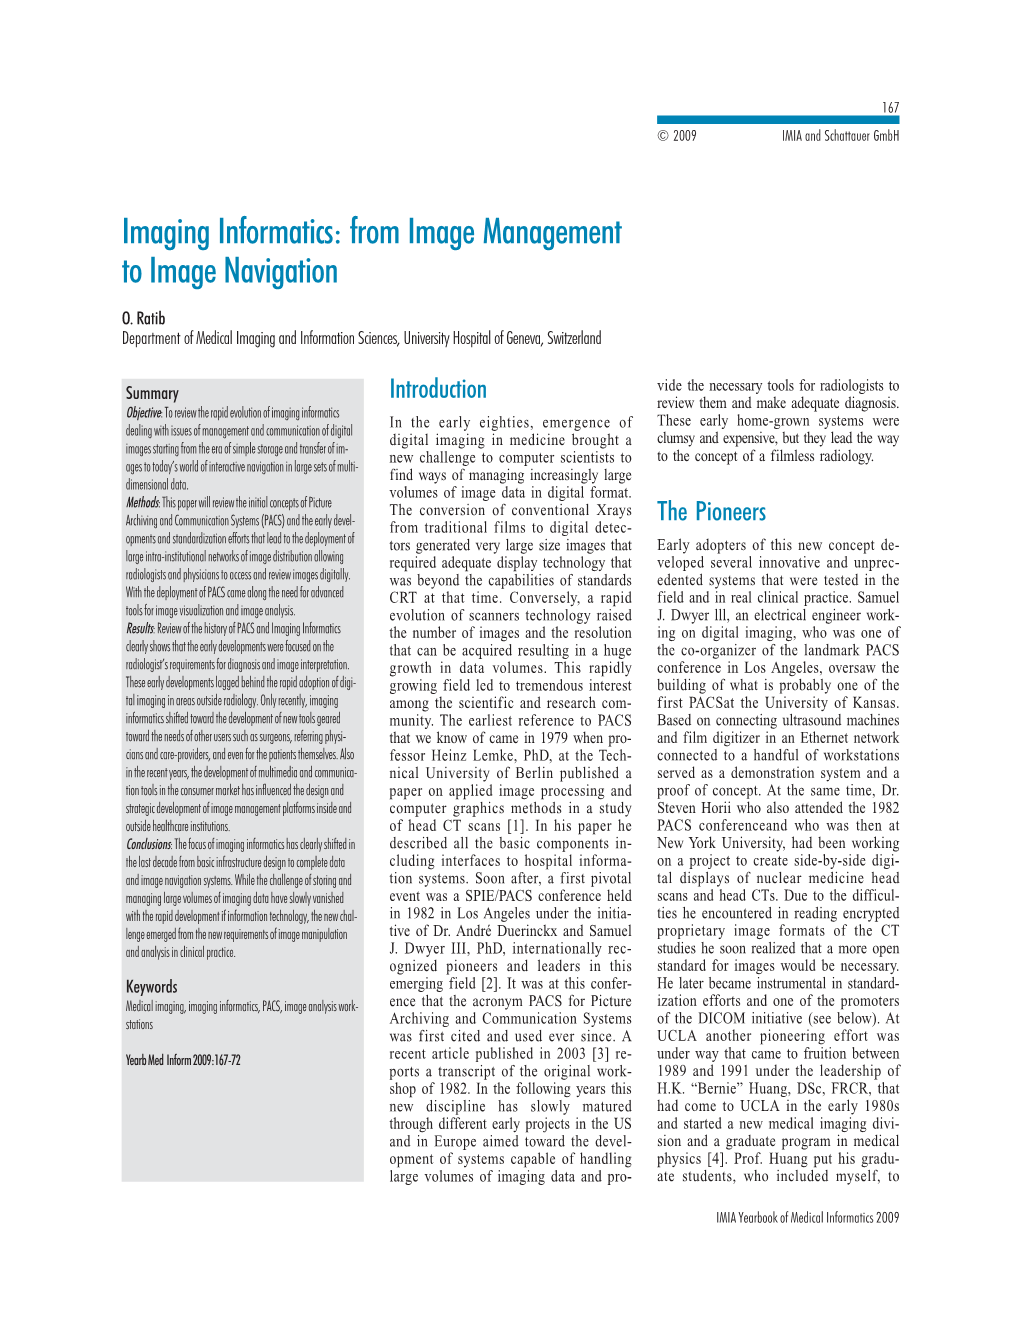 Imaging Informatics: from Image Management to Image Navigation